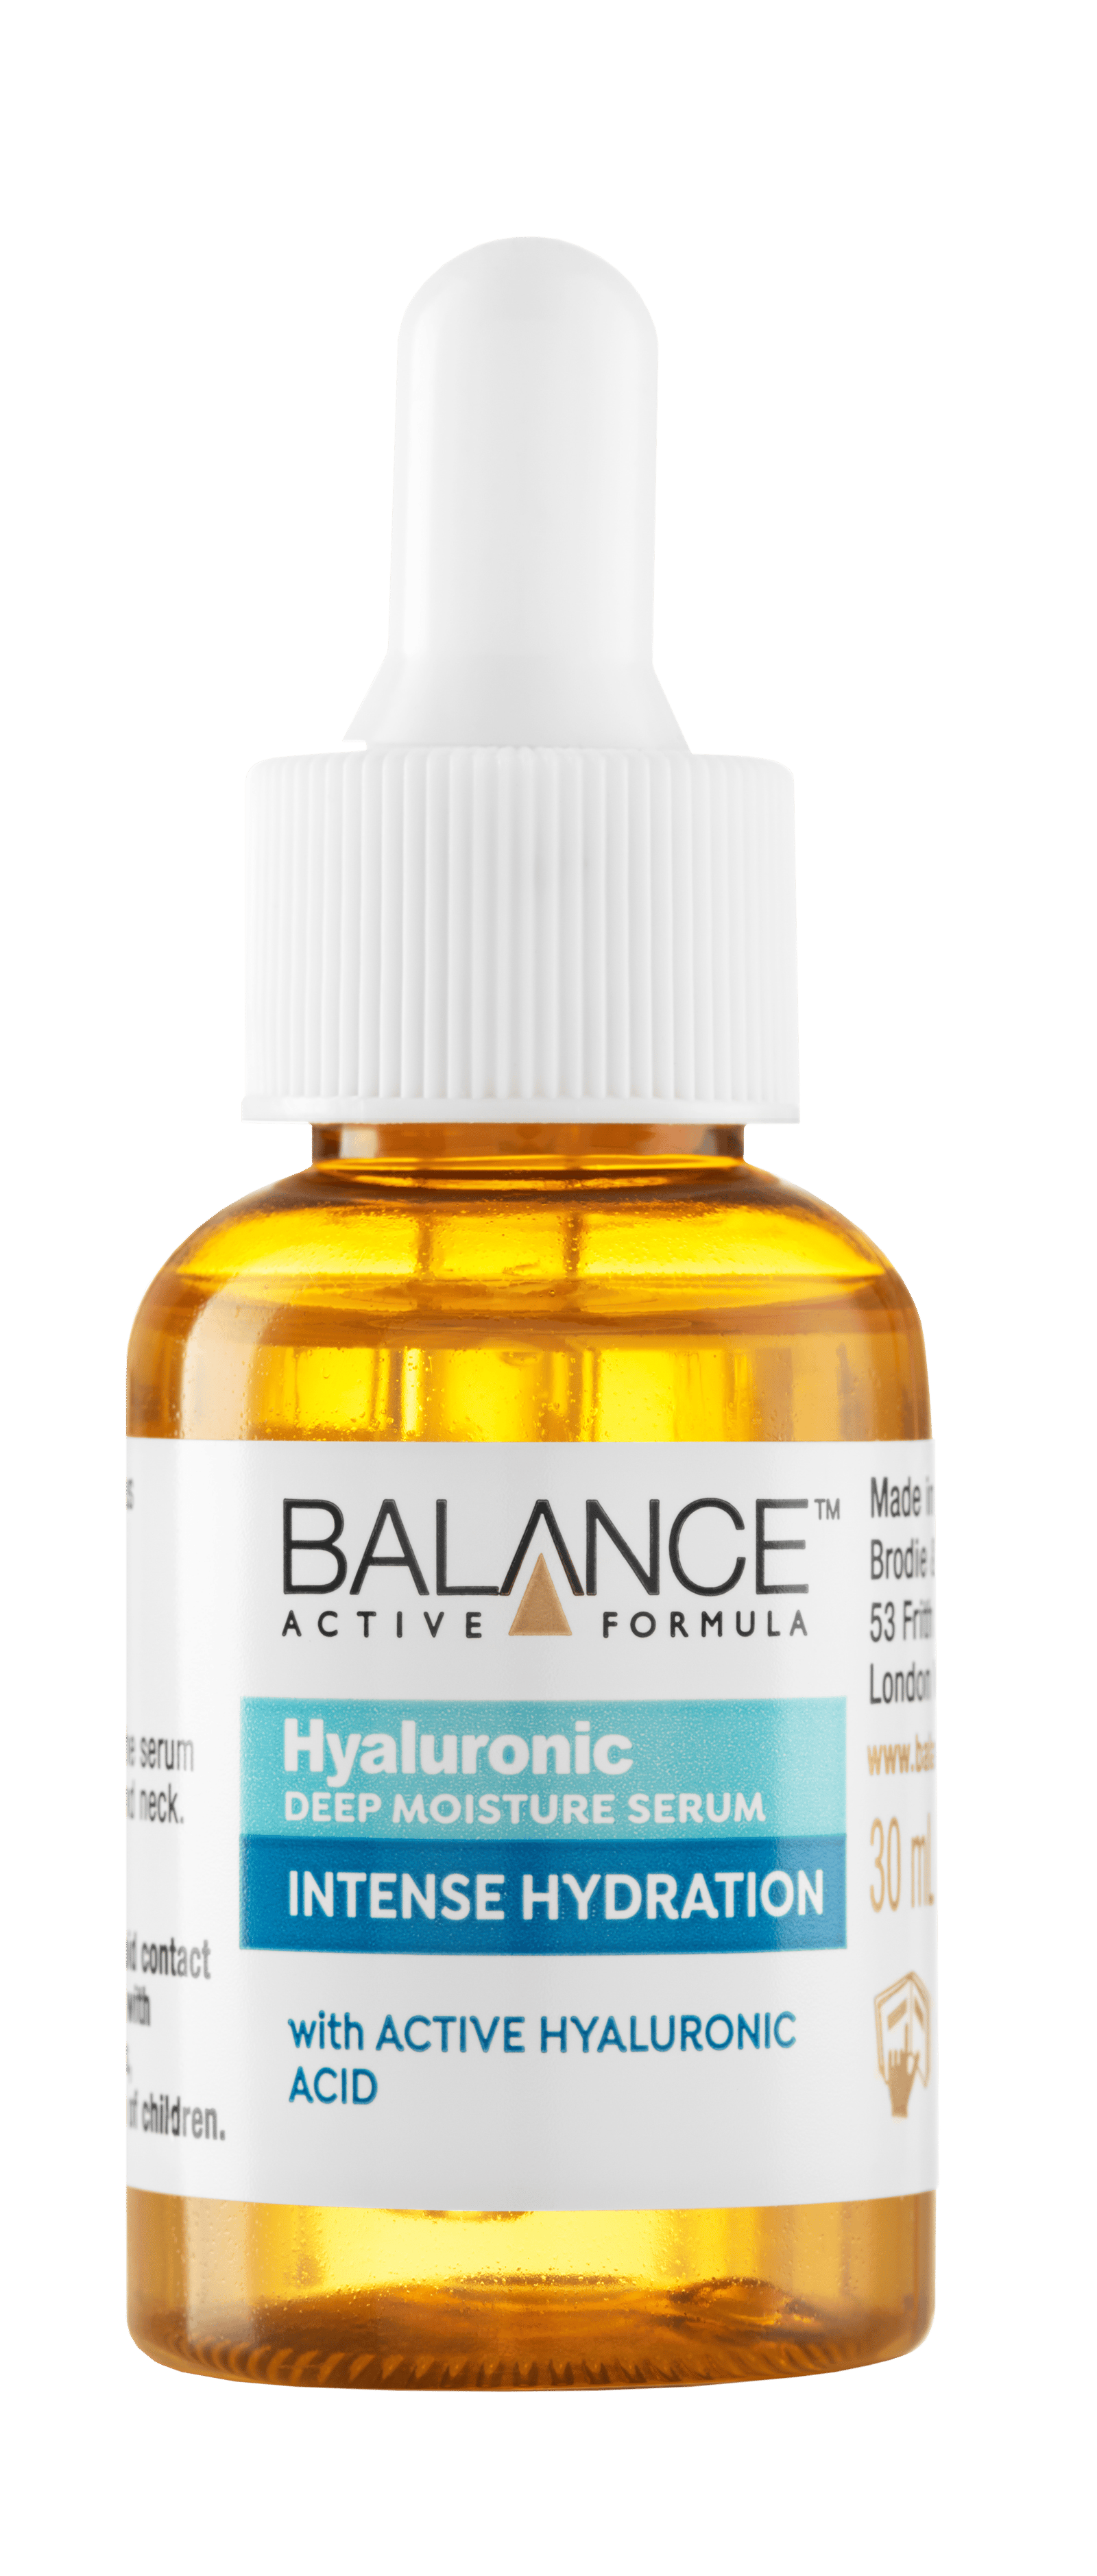 Balance Active Formula Hyaluronic Deep Moisture Serum 30 ml